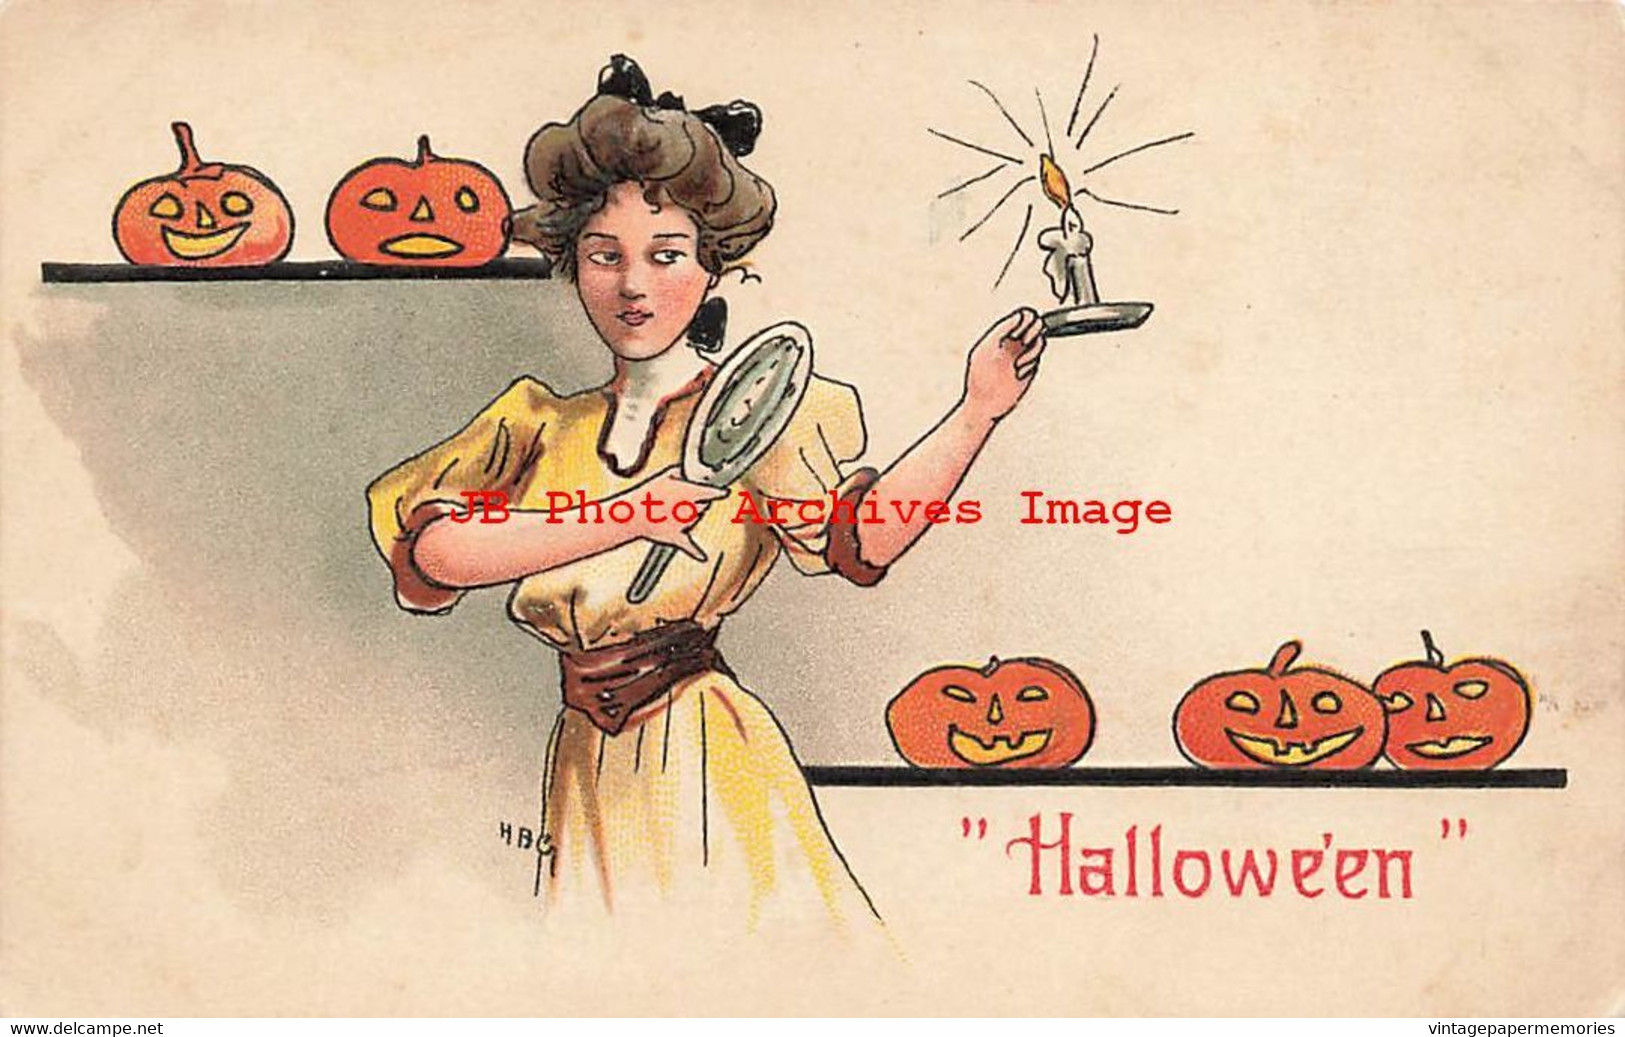 325105-Halloween, Leubrie & Elkus No 2215-4, JOLs Watching Woman Peel An Apple - Halloween